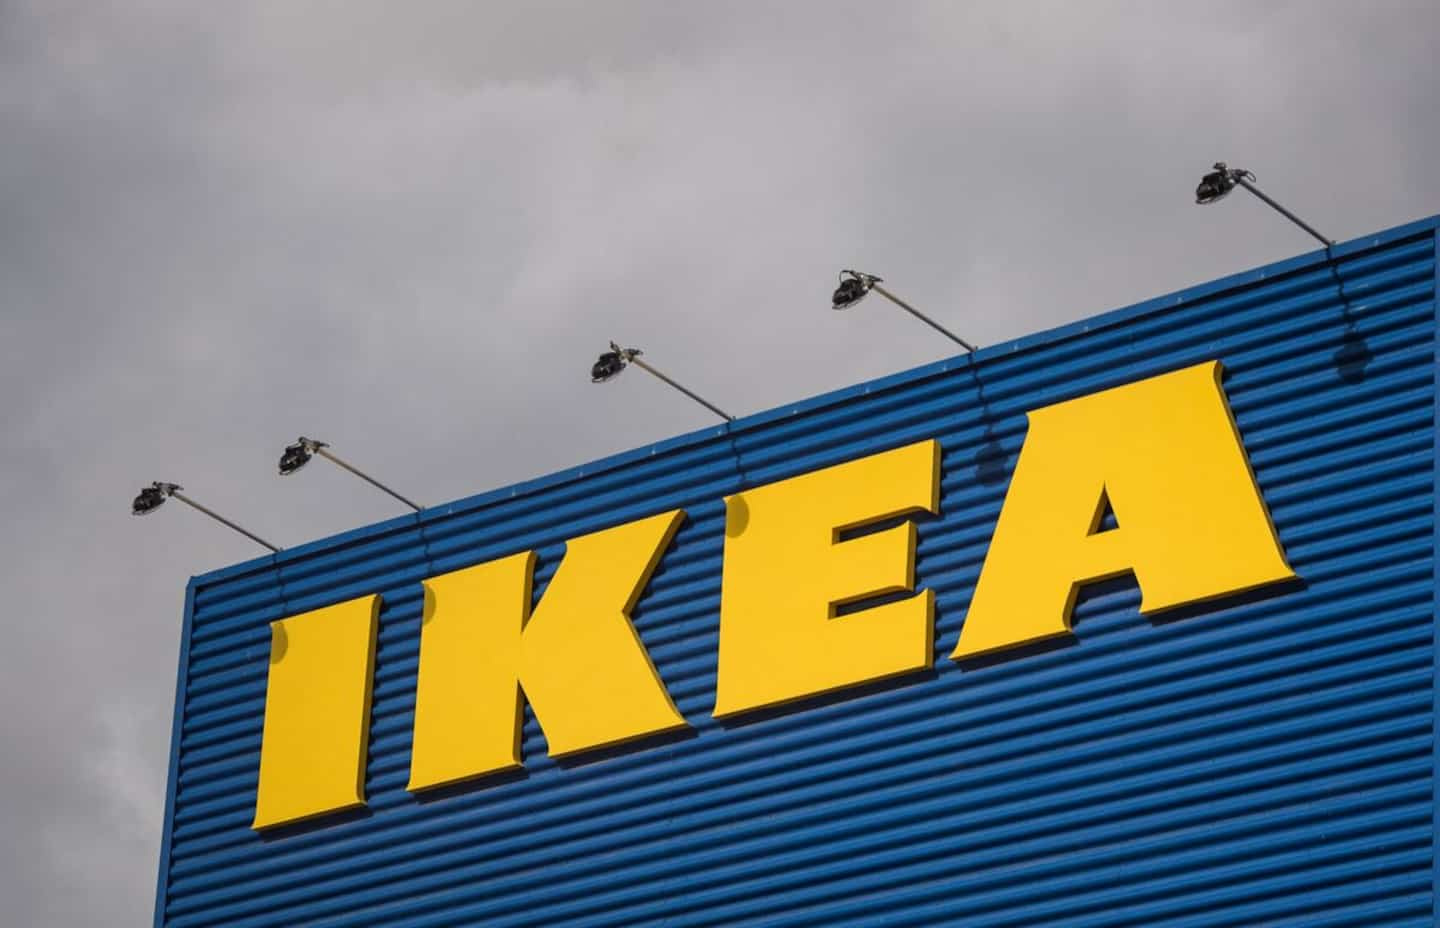 IKEA workers on strike Saturday